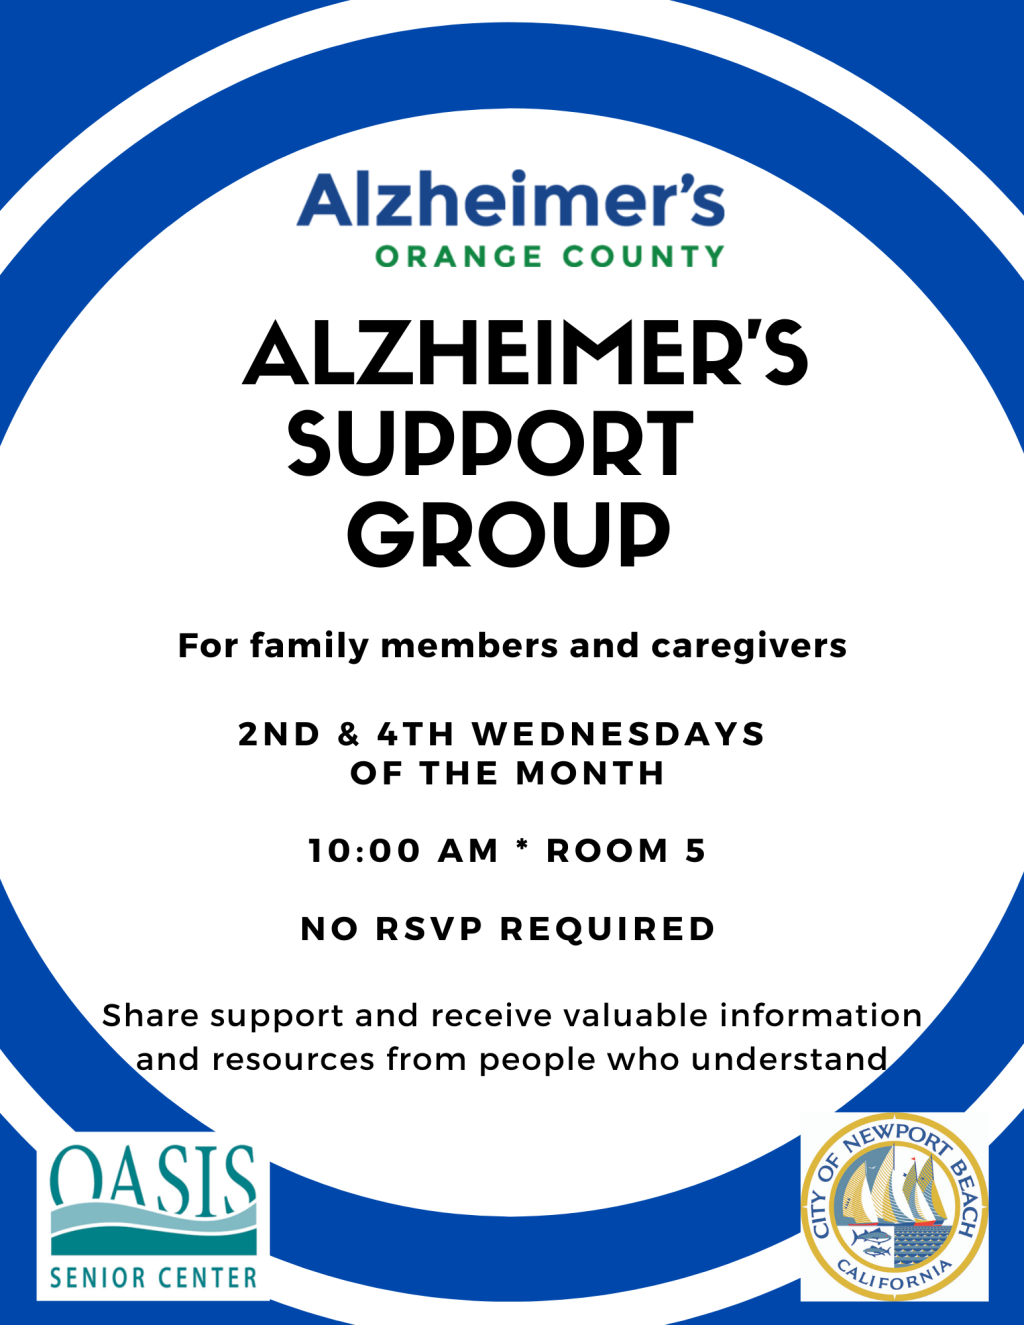 Alzheimer's support group